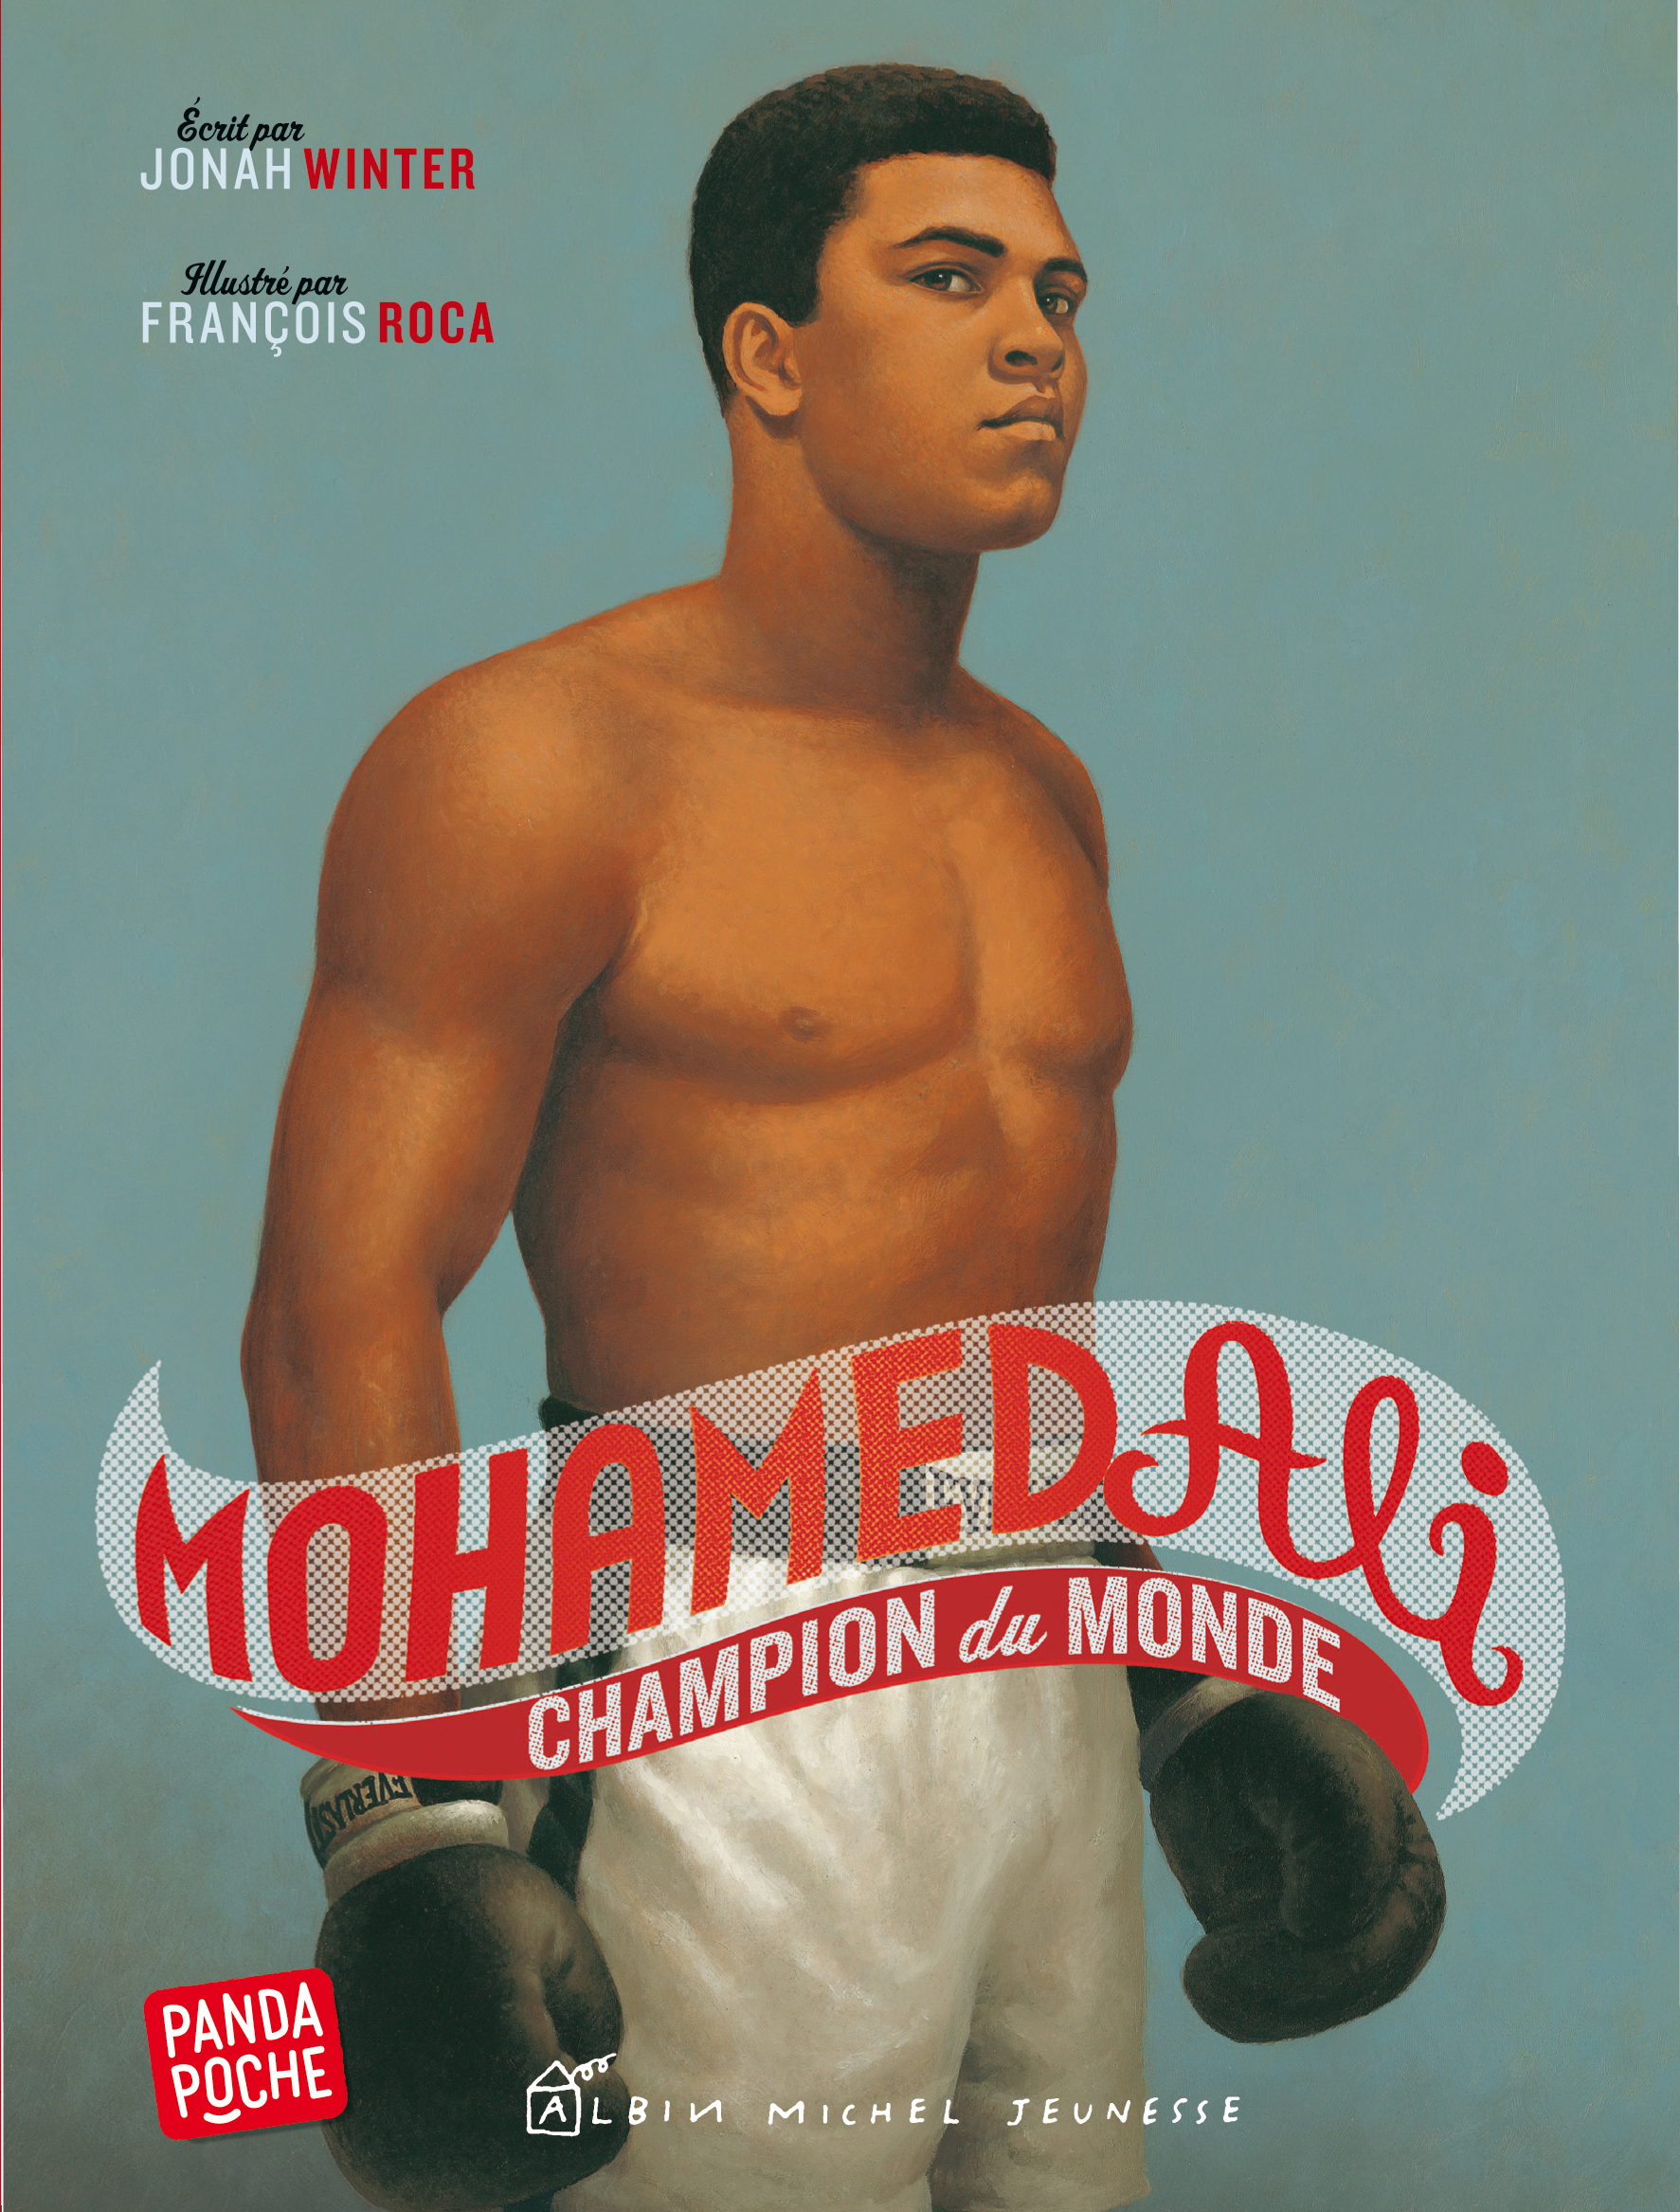 Couverture du livre Mohamed Ali champion du monde